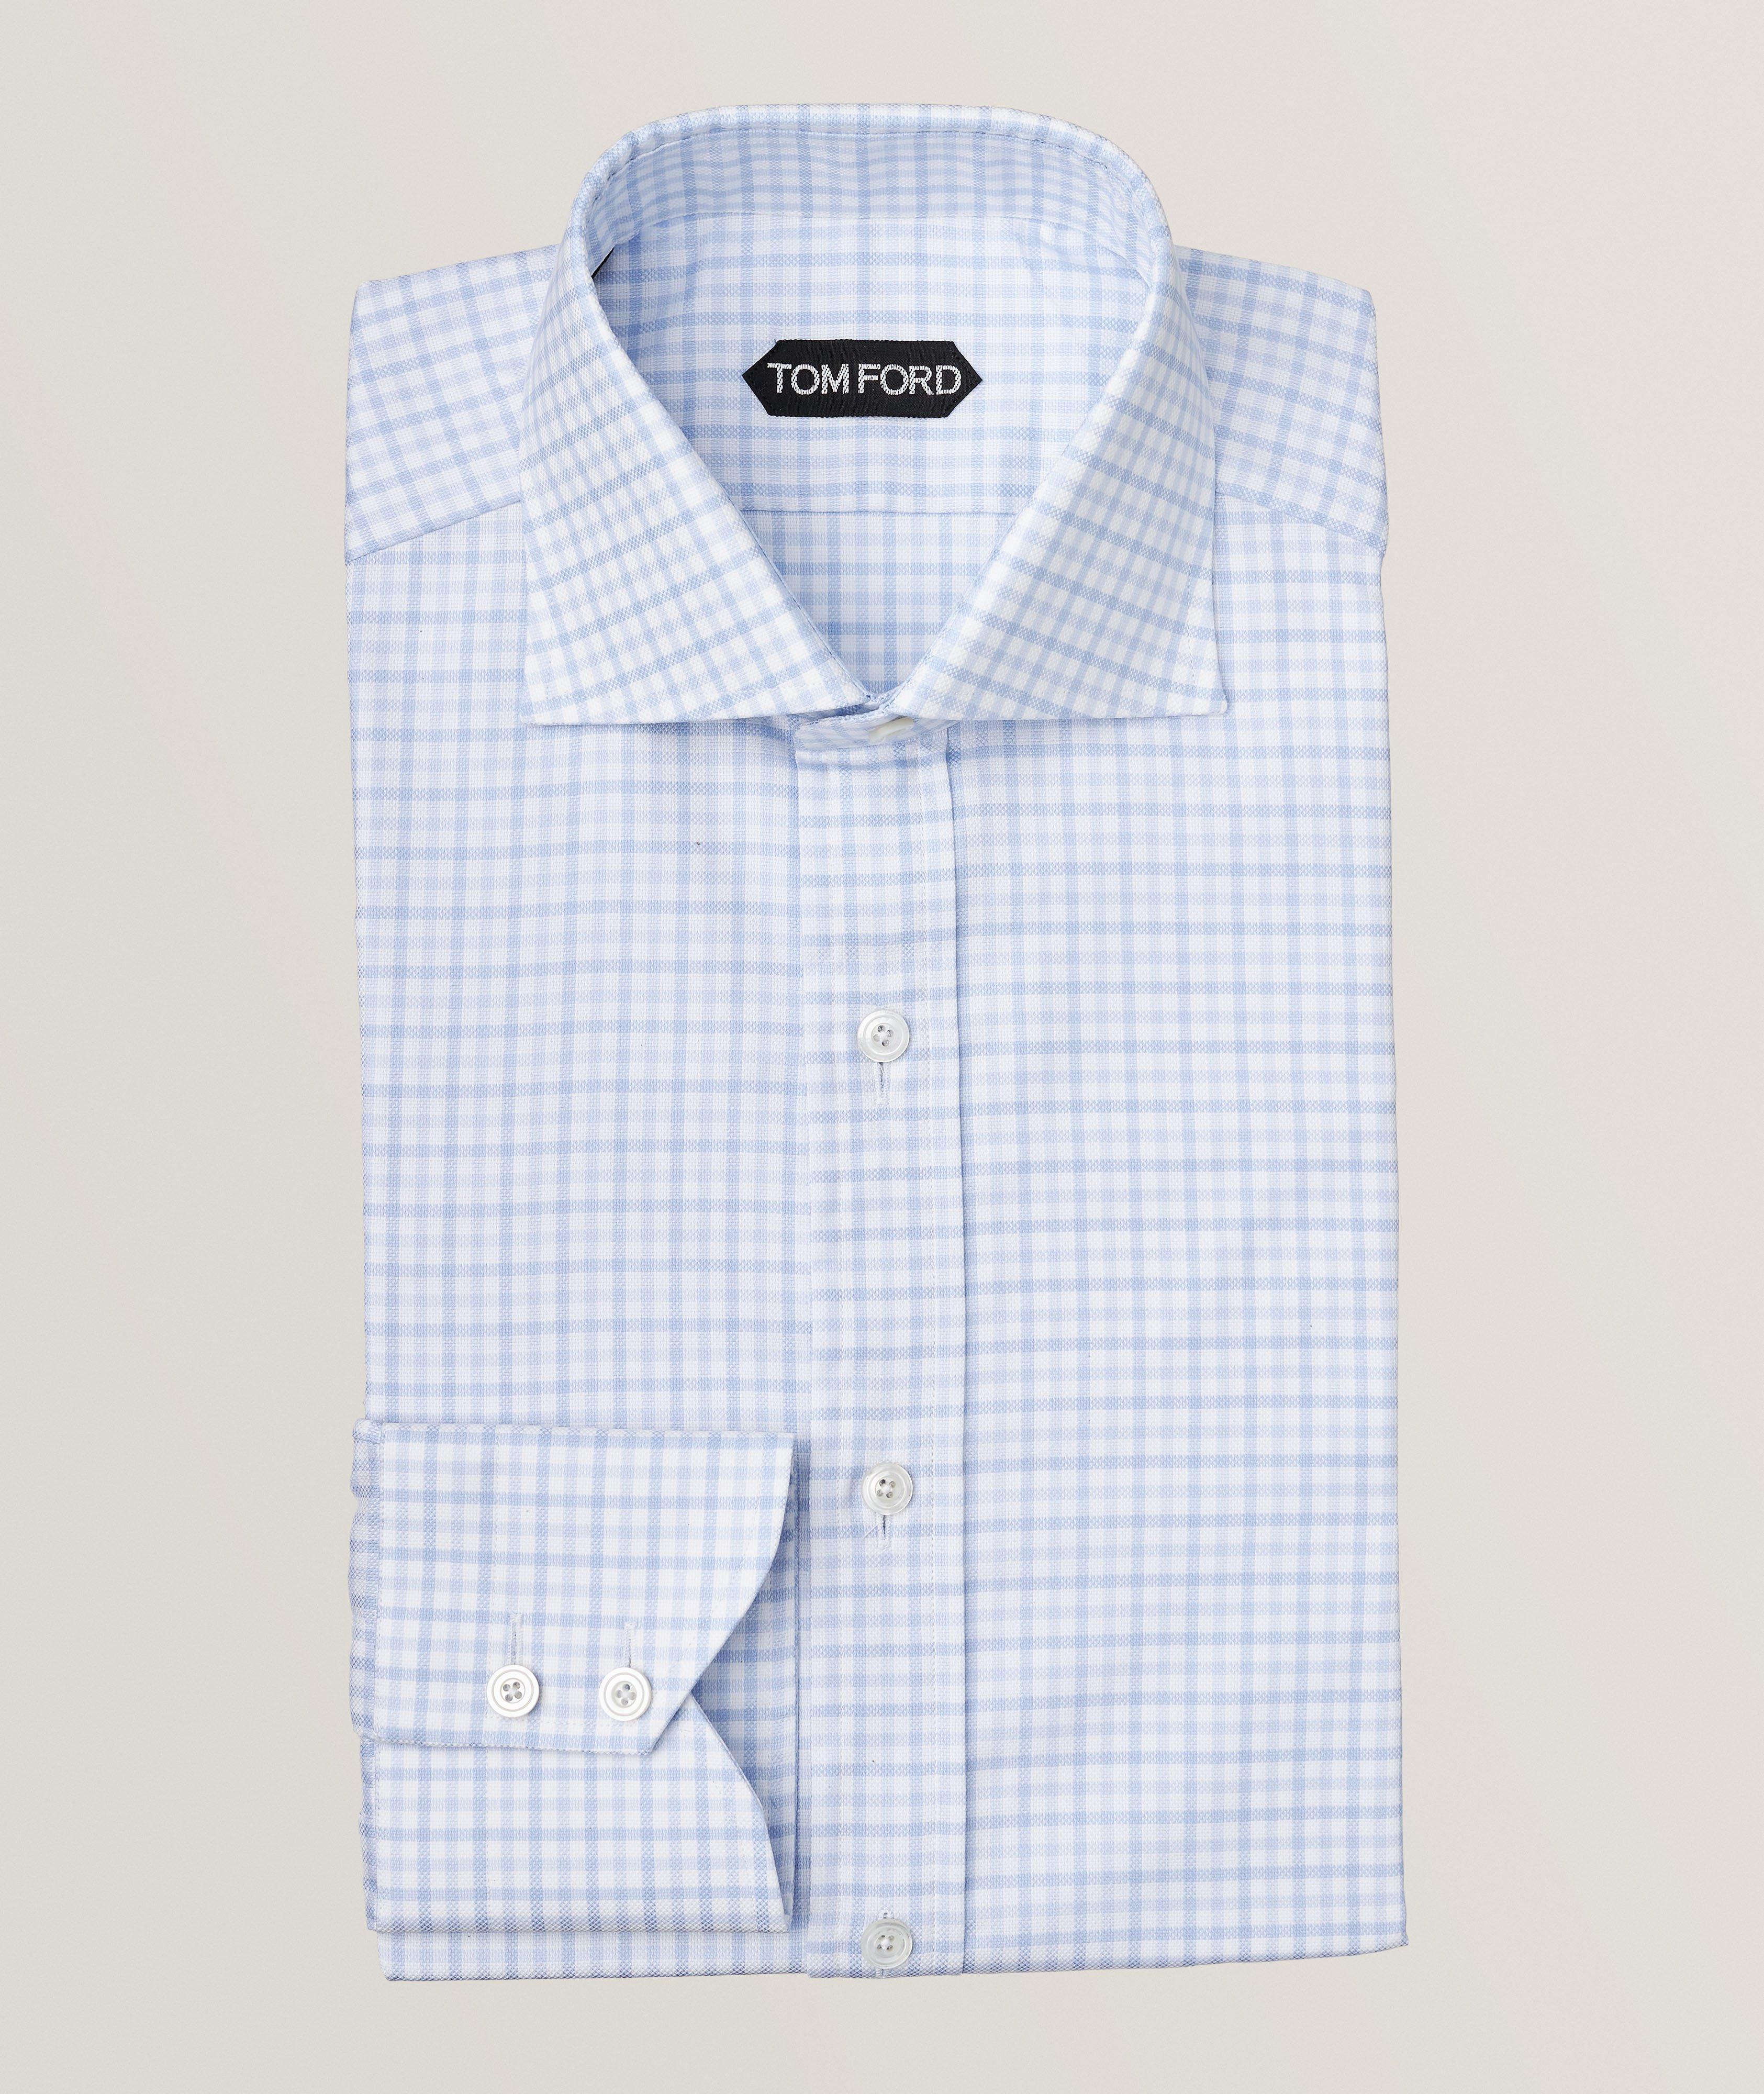 Gingahm Cotton-Blend Dress Shirt image 0